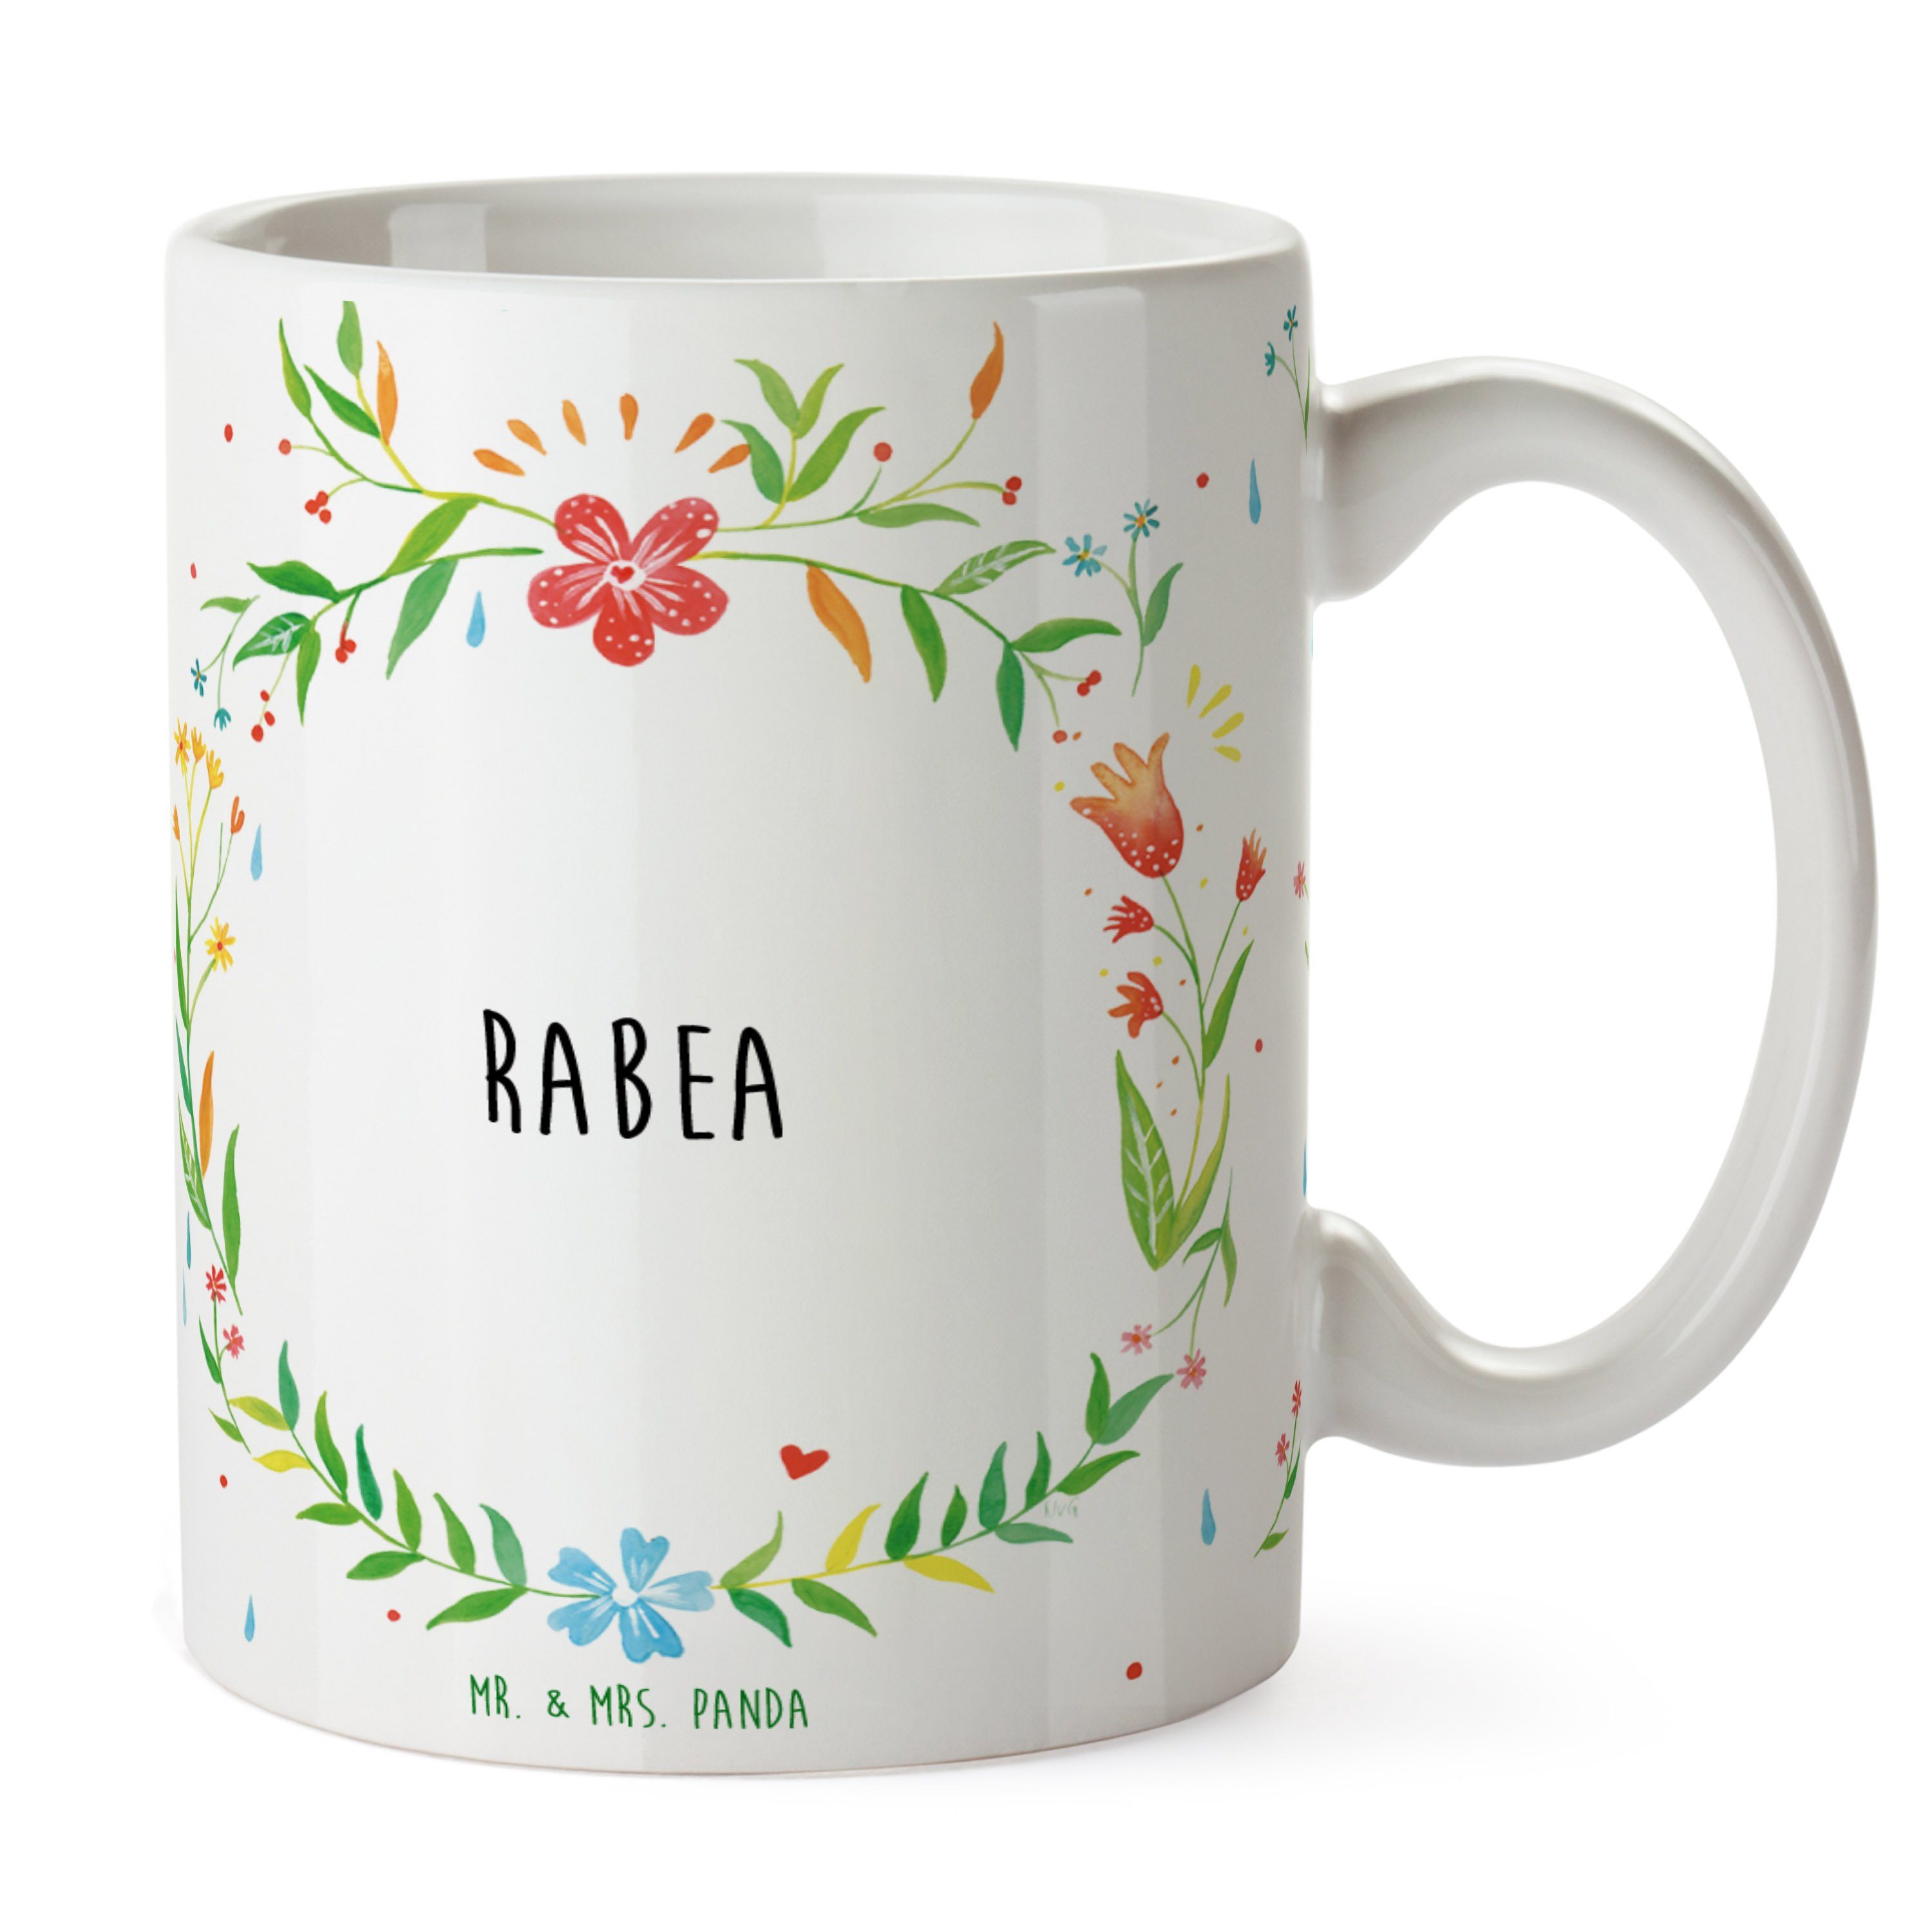 Mr. & Mrs. Panda Tasse Geschenk Tasse, Rabea - Tasse, Keramik Porzellantasse, Geschenk, Kaffeebecher